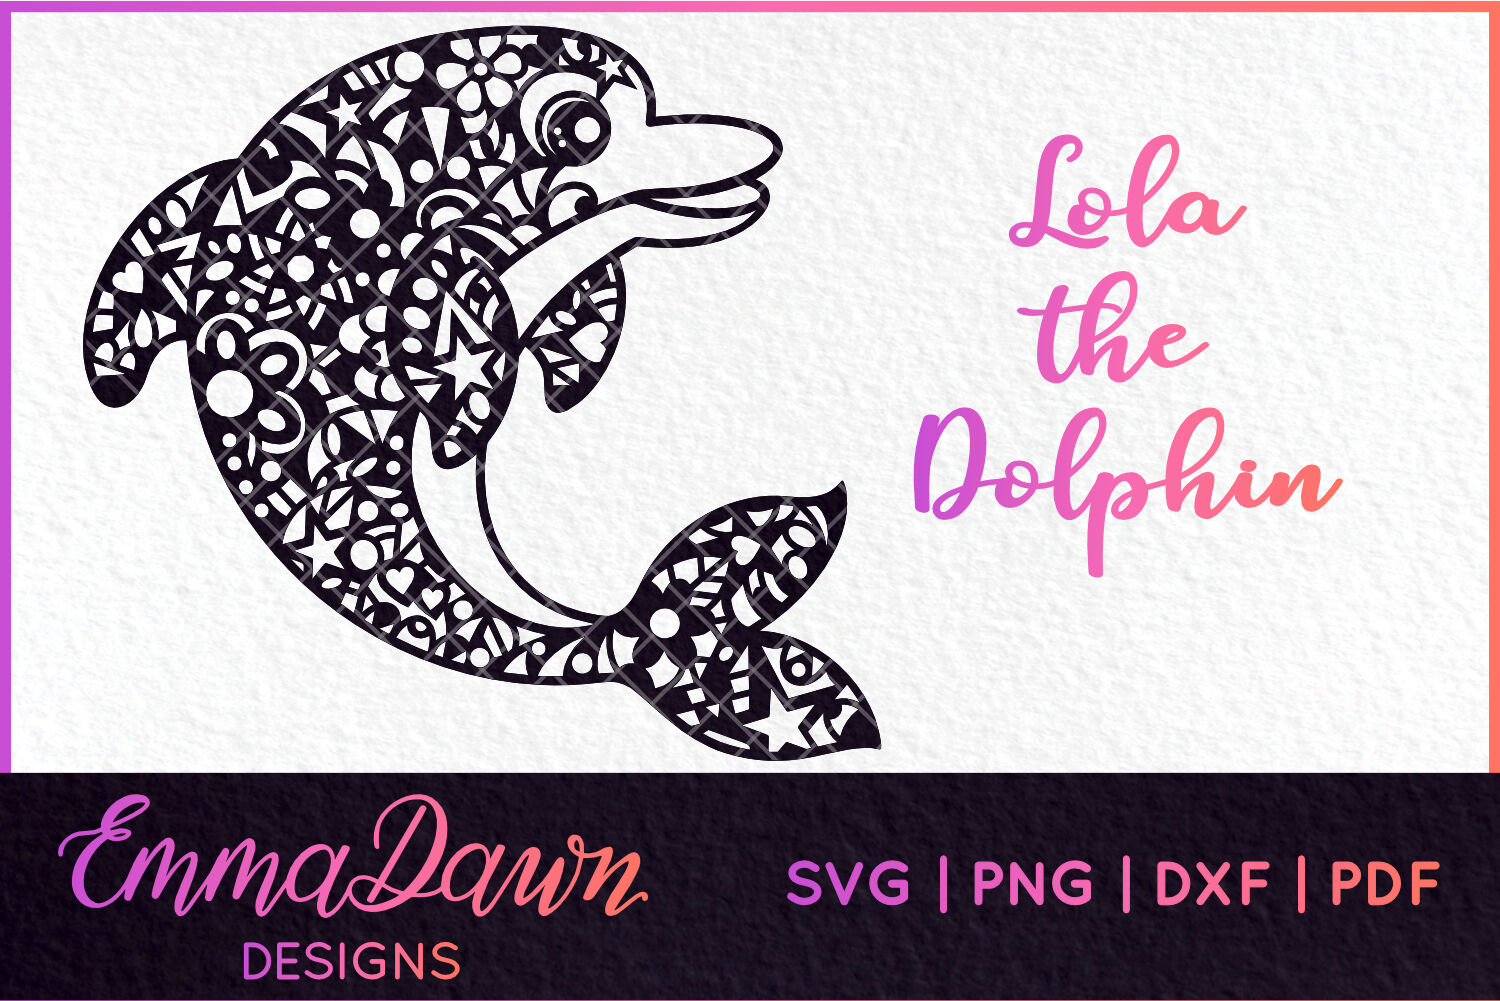 Download Lola The Dolphin Mandala Zentangle Design Svg By Emma Dawn Designs Thehungryjpeg Com